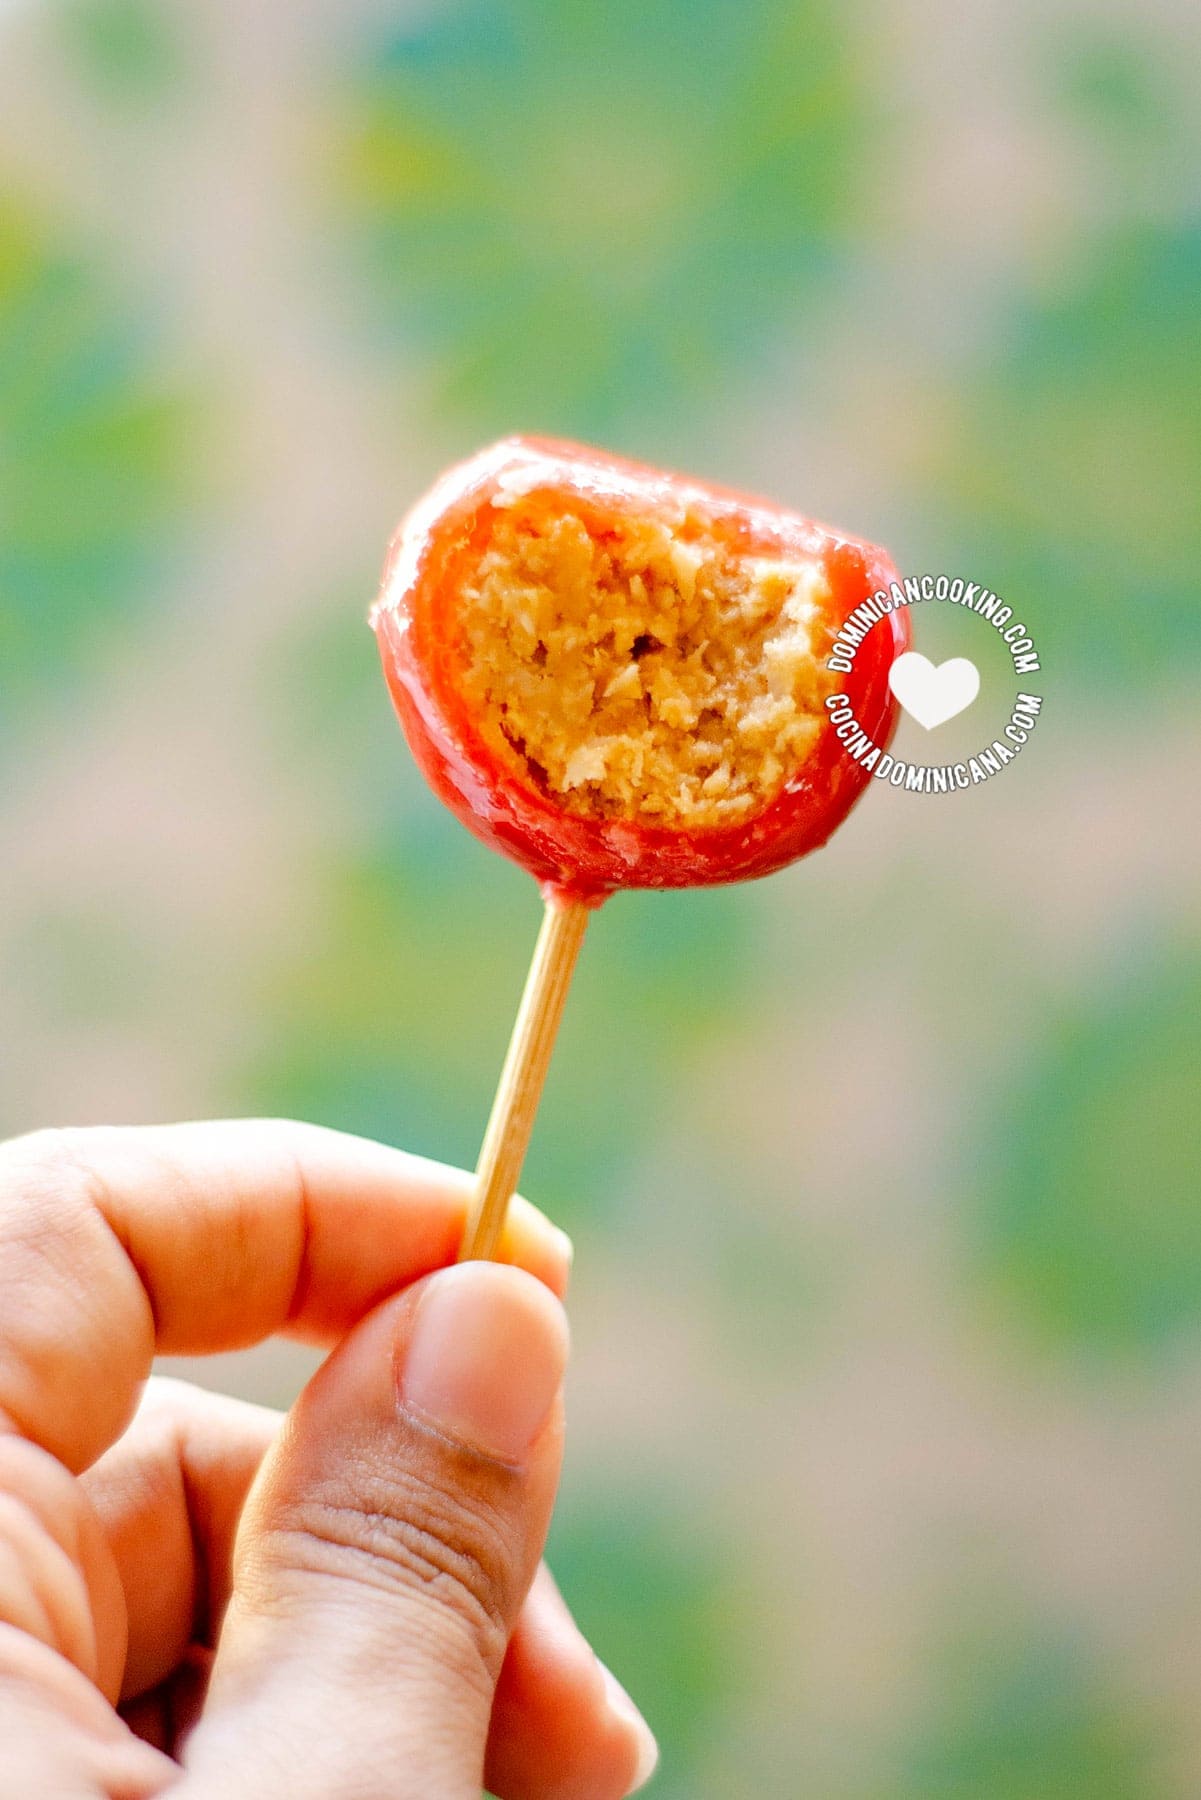 Memelos, churumbeles, cacos (Dominican lollipops).